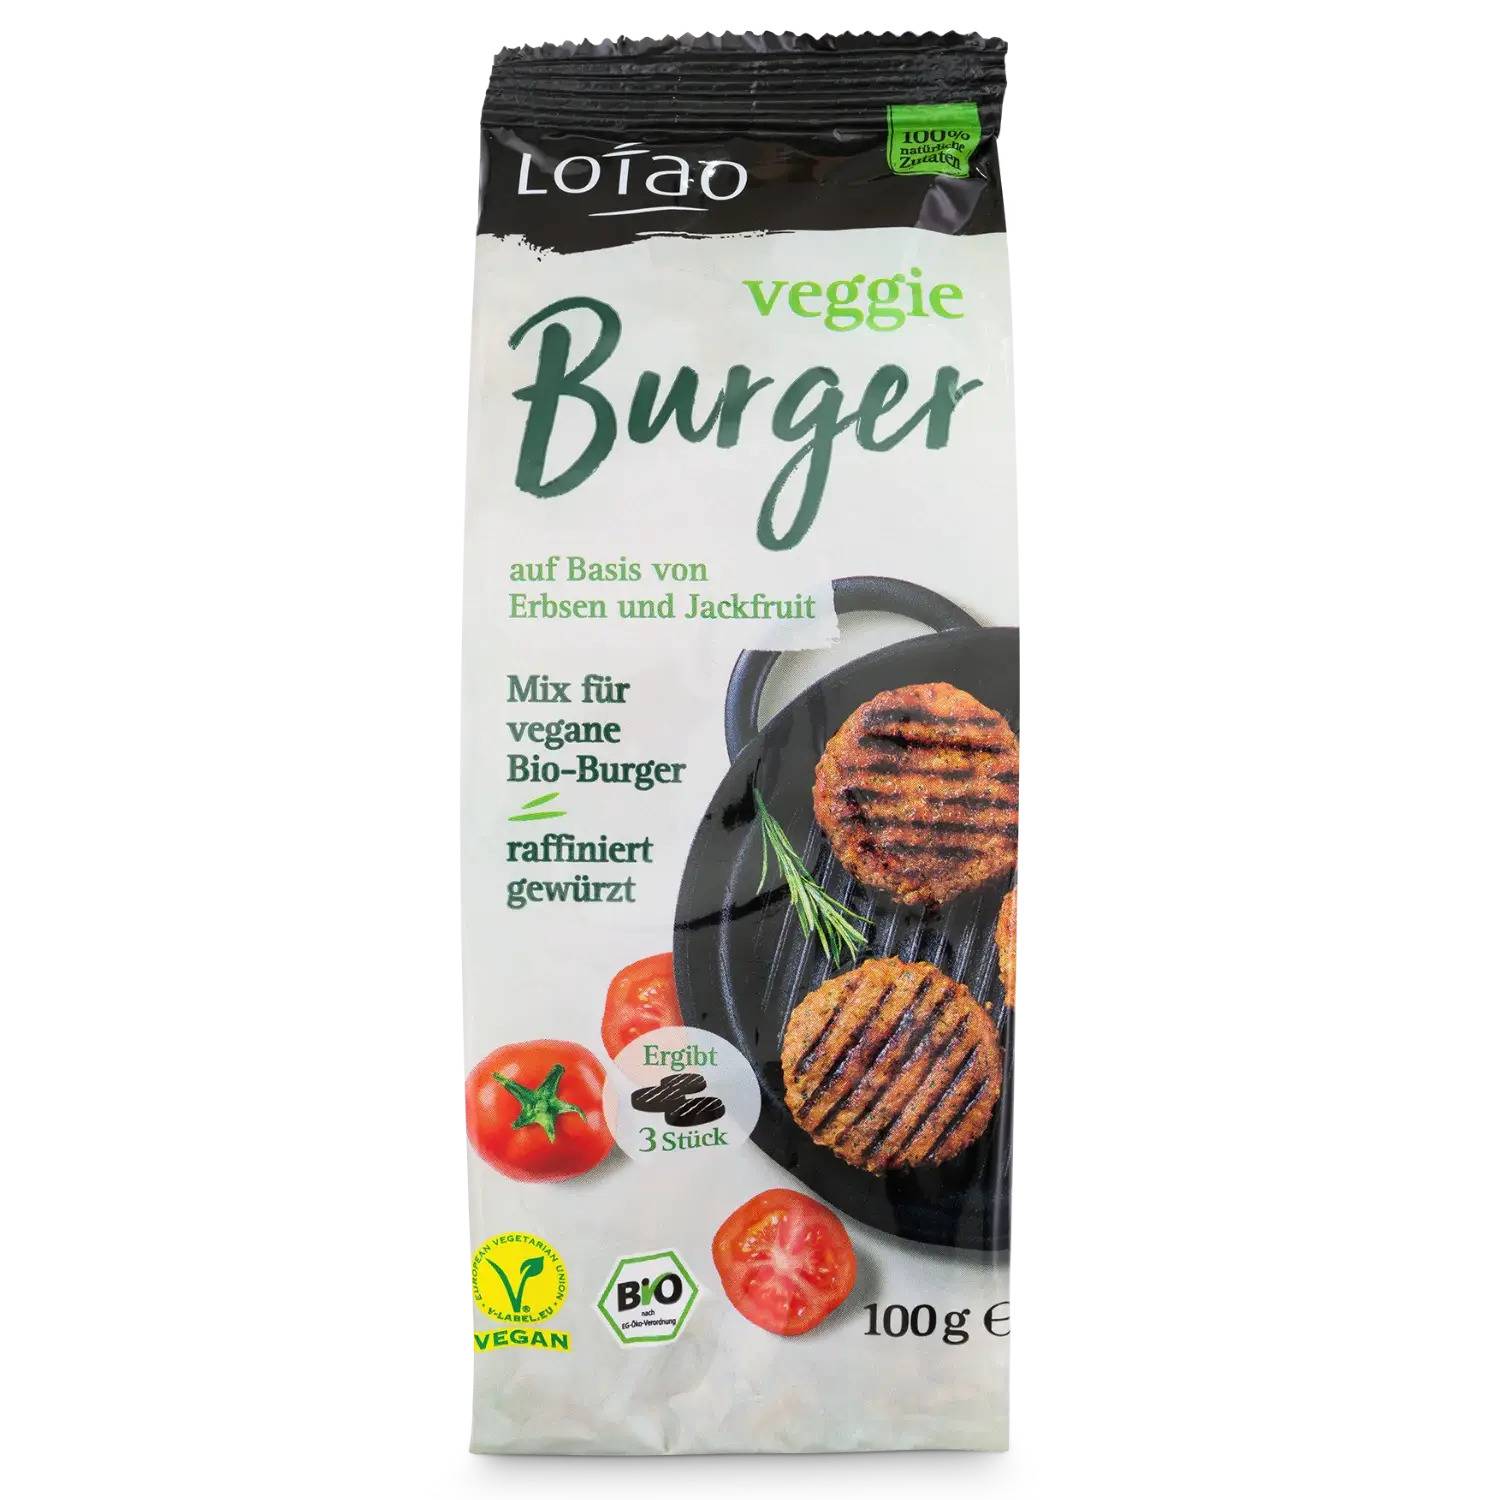 Mix Pentru Burger Vegan, Eco-bio, 100g - Lotao